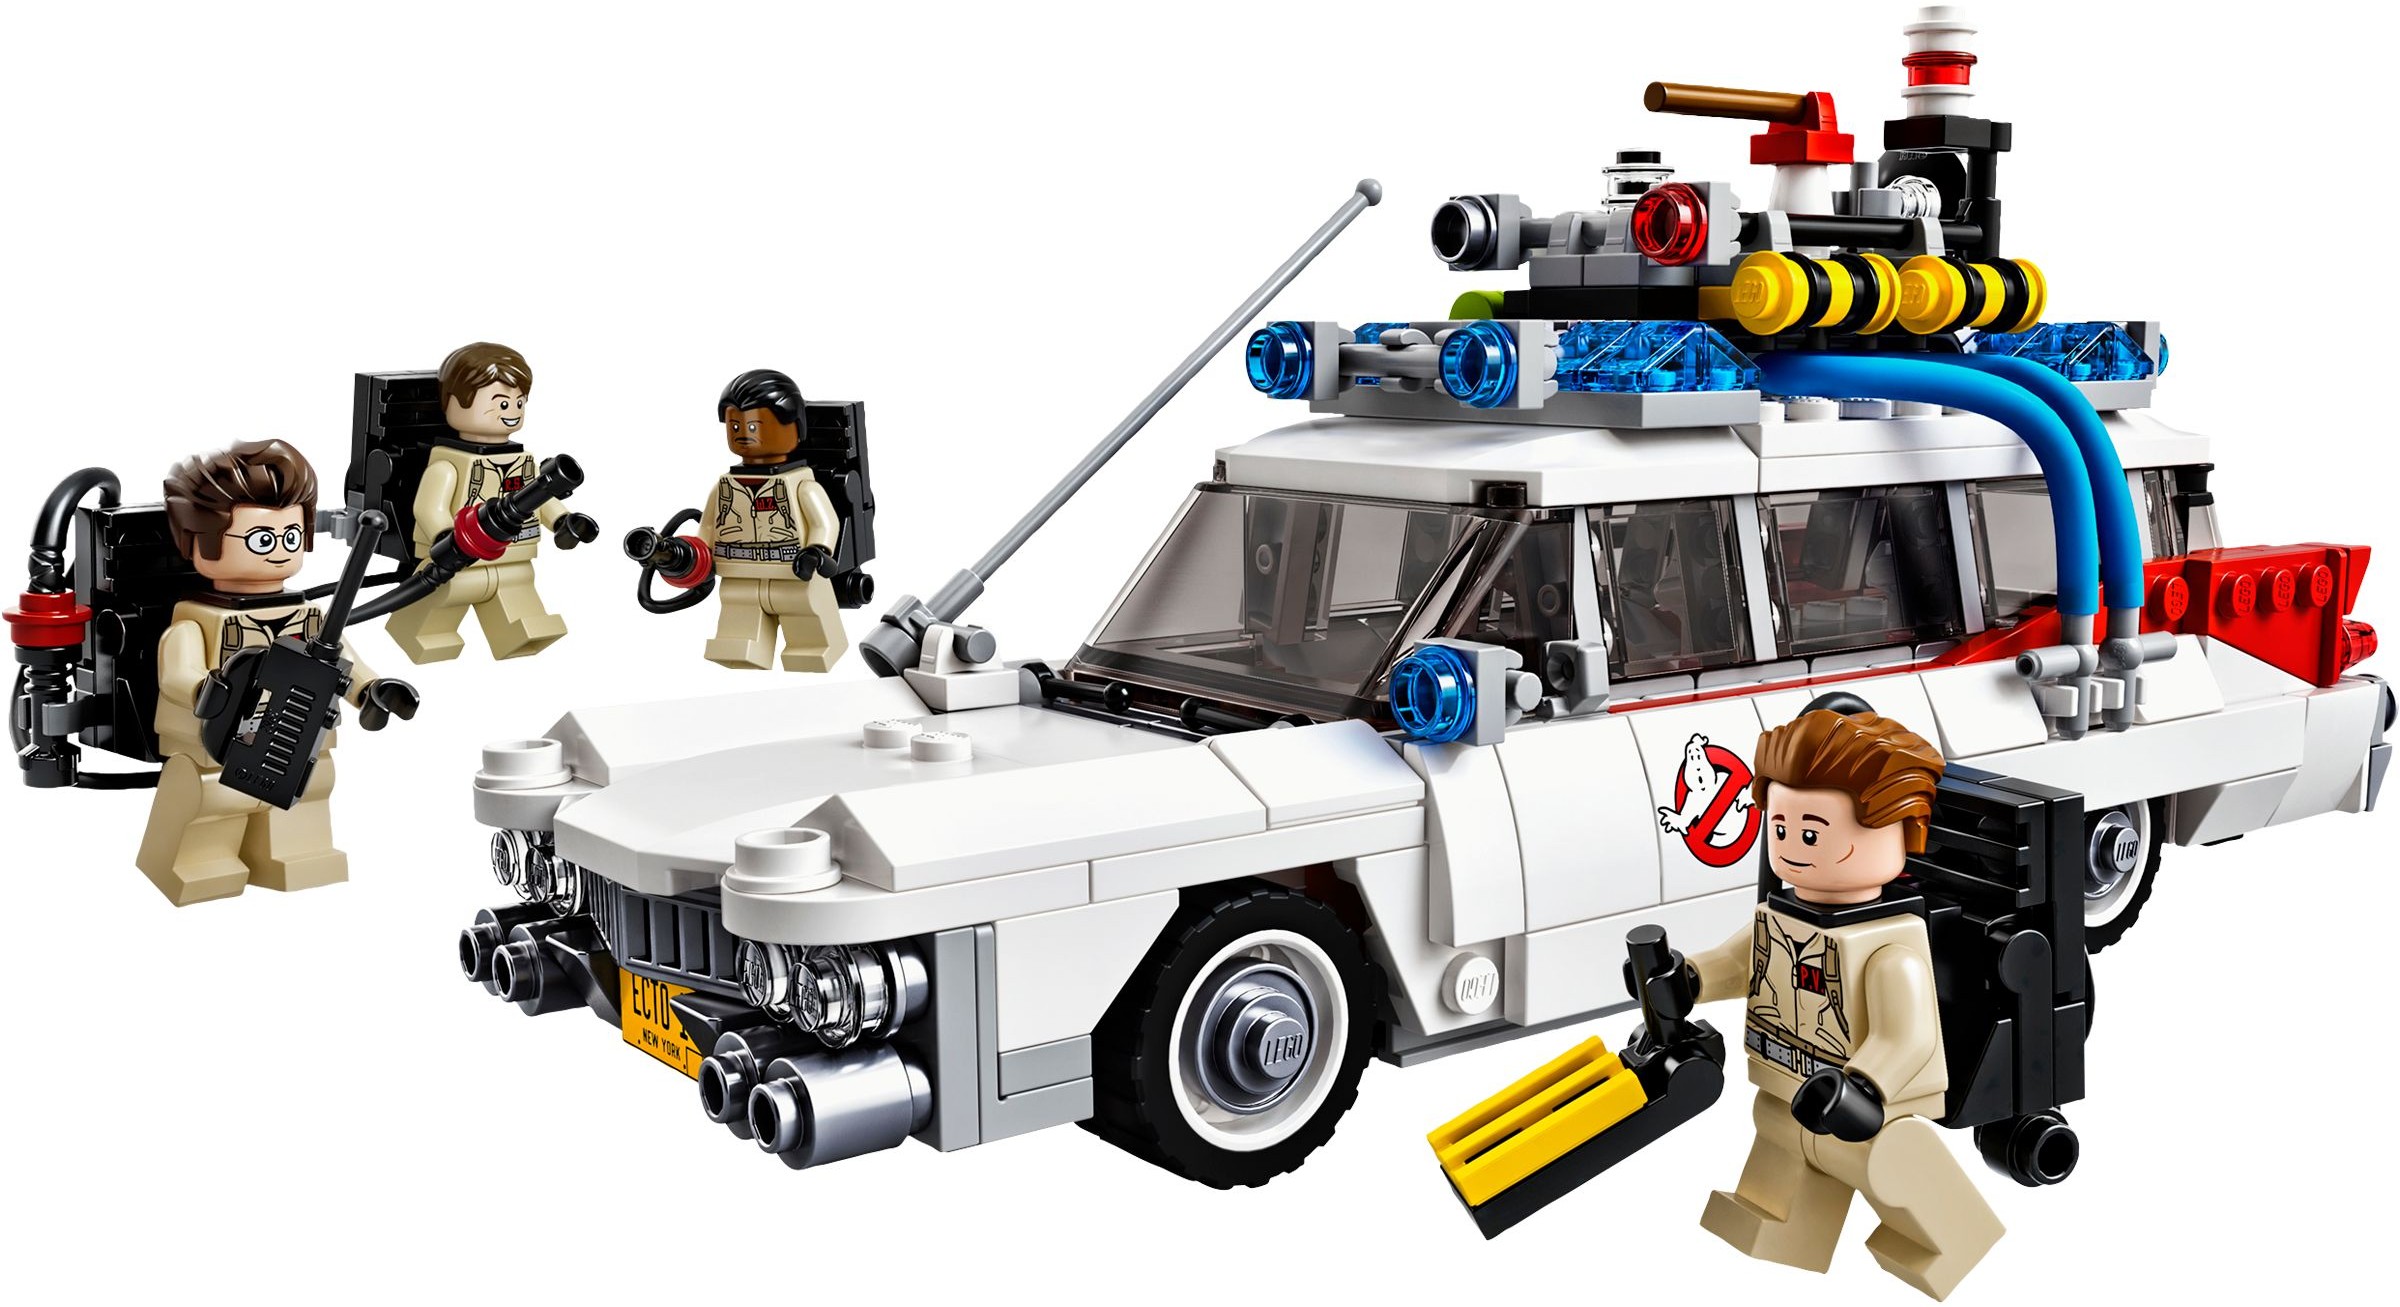 21108 LEGO® IDEAS Ghostbusters Ecto-1